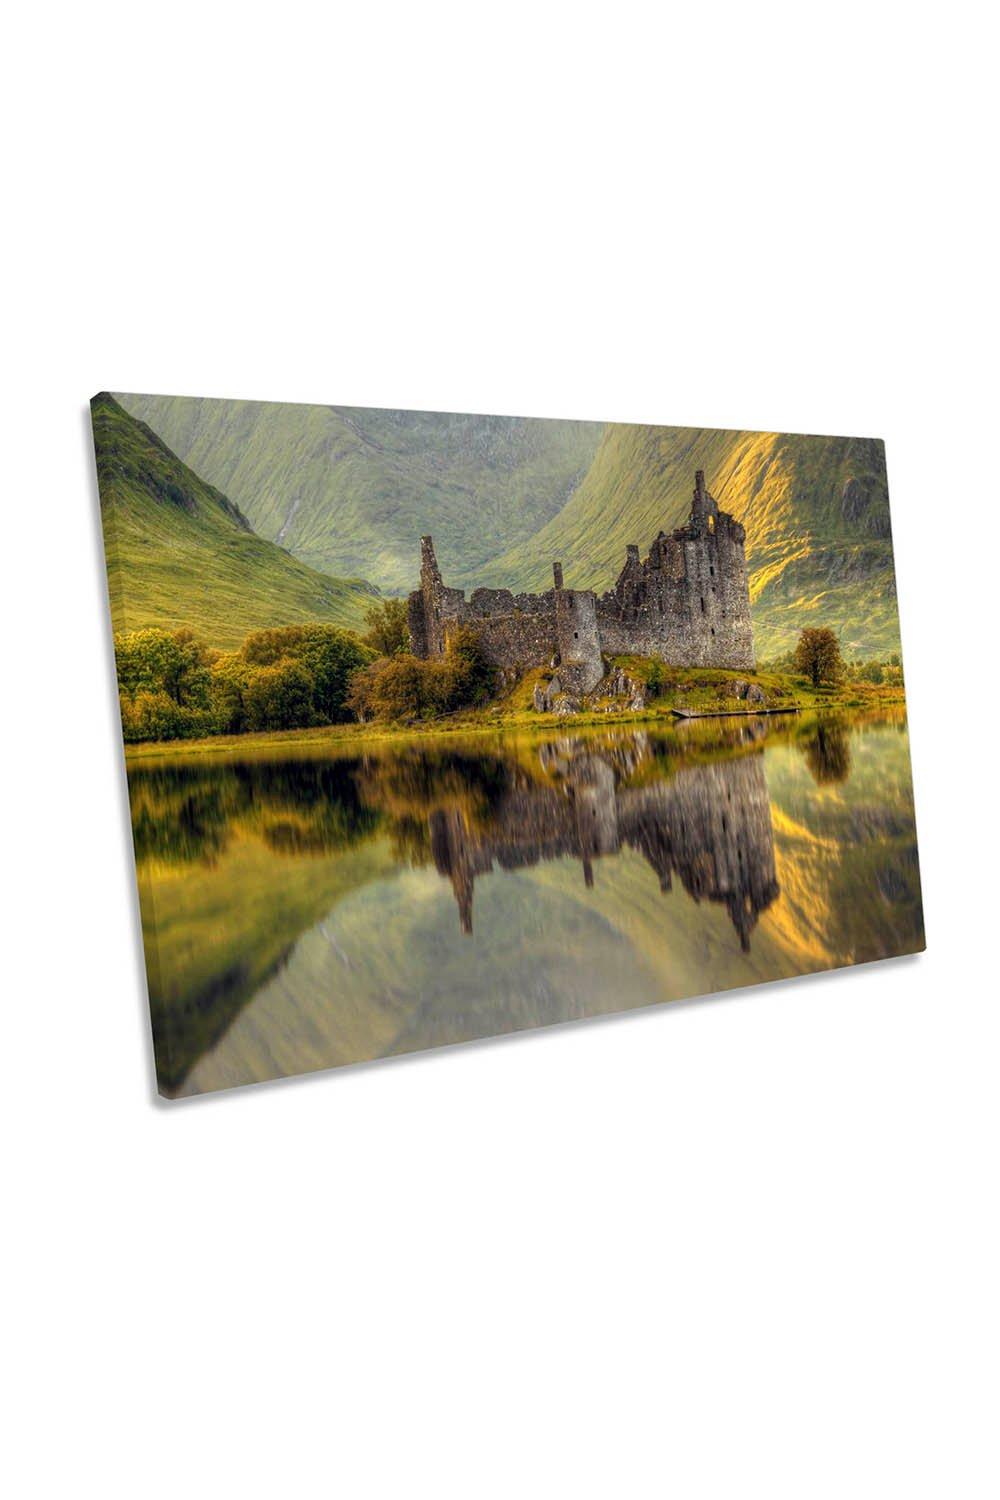 Kilchurn Castle Scotland Canvas Wall Art Picture Print